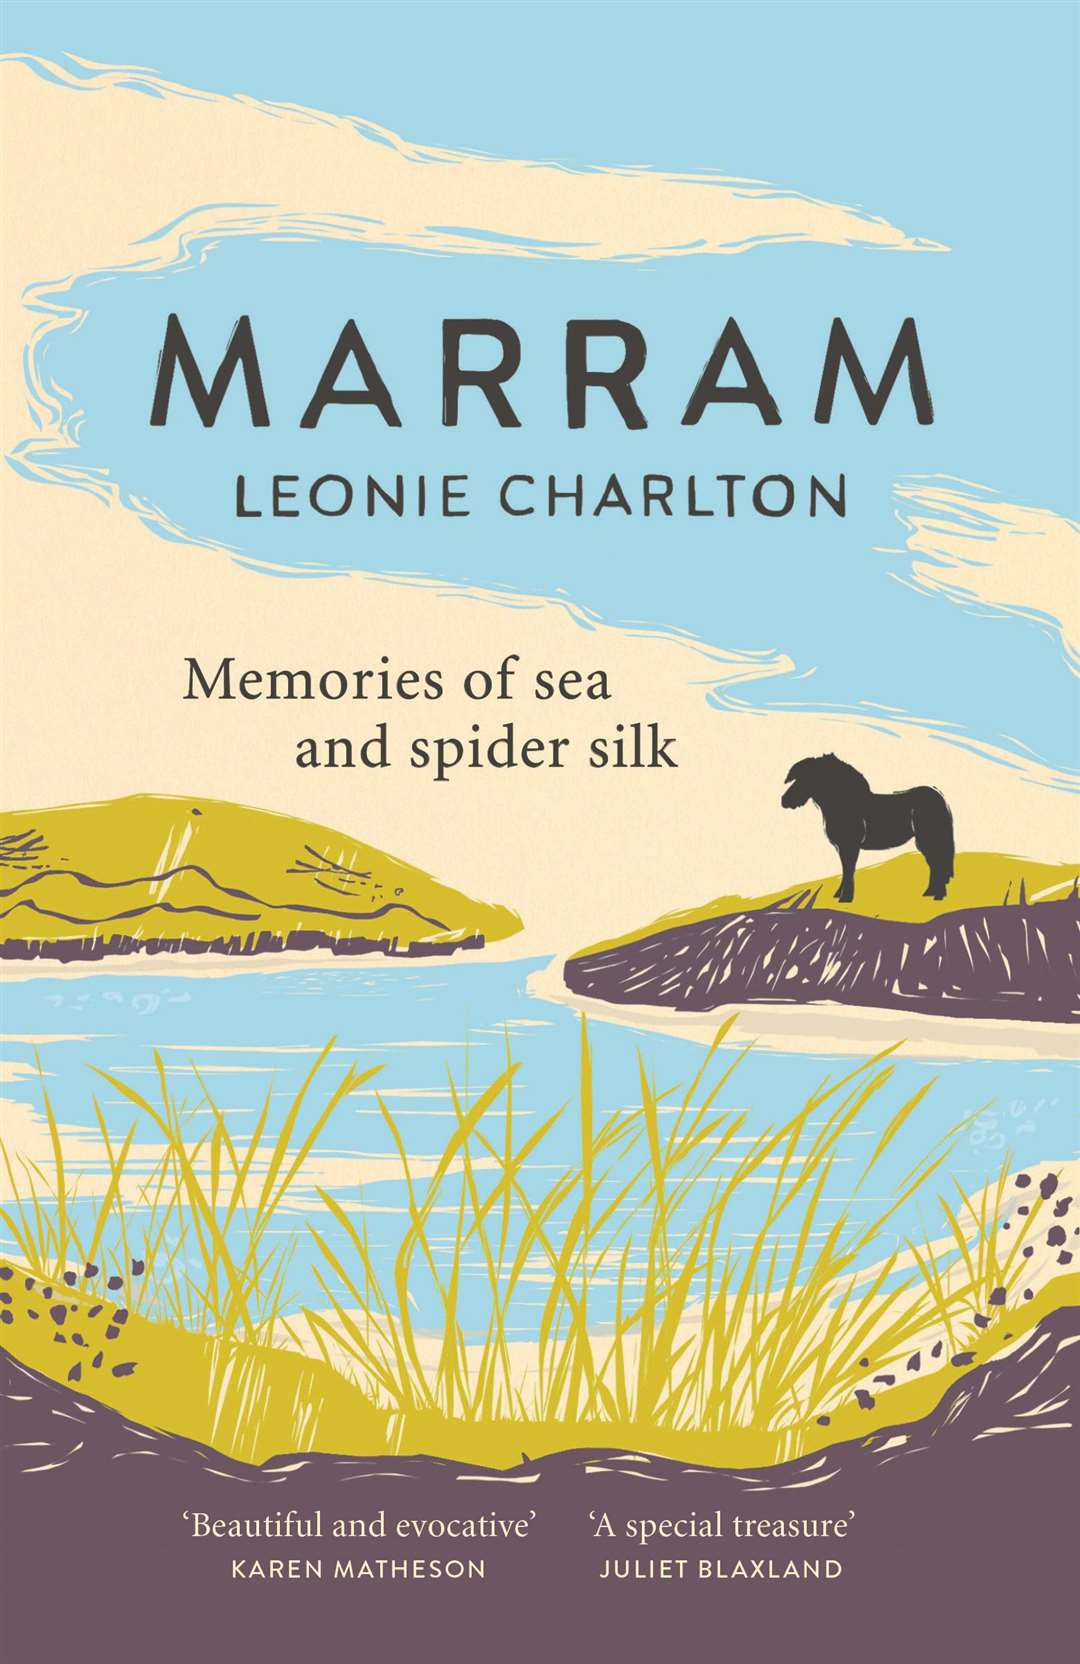 Marram by Leonie Charlton.